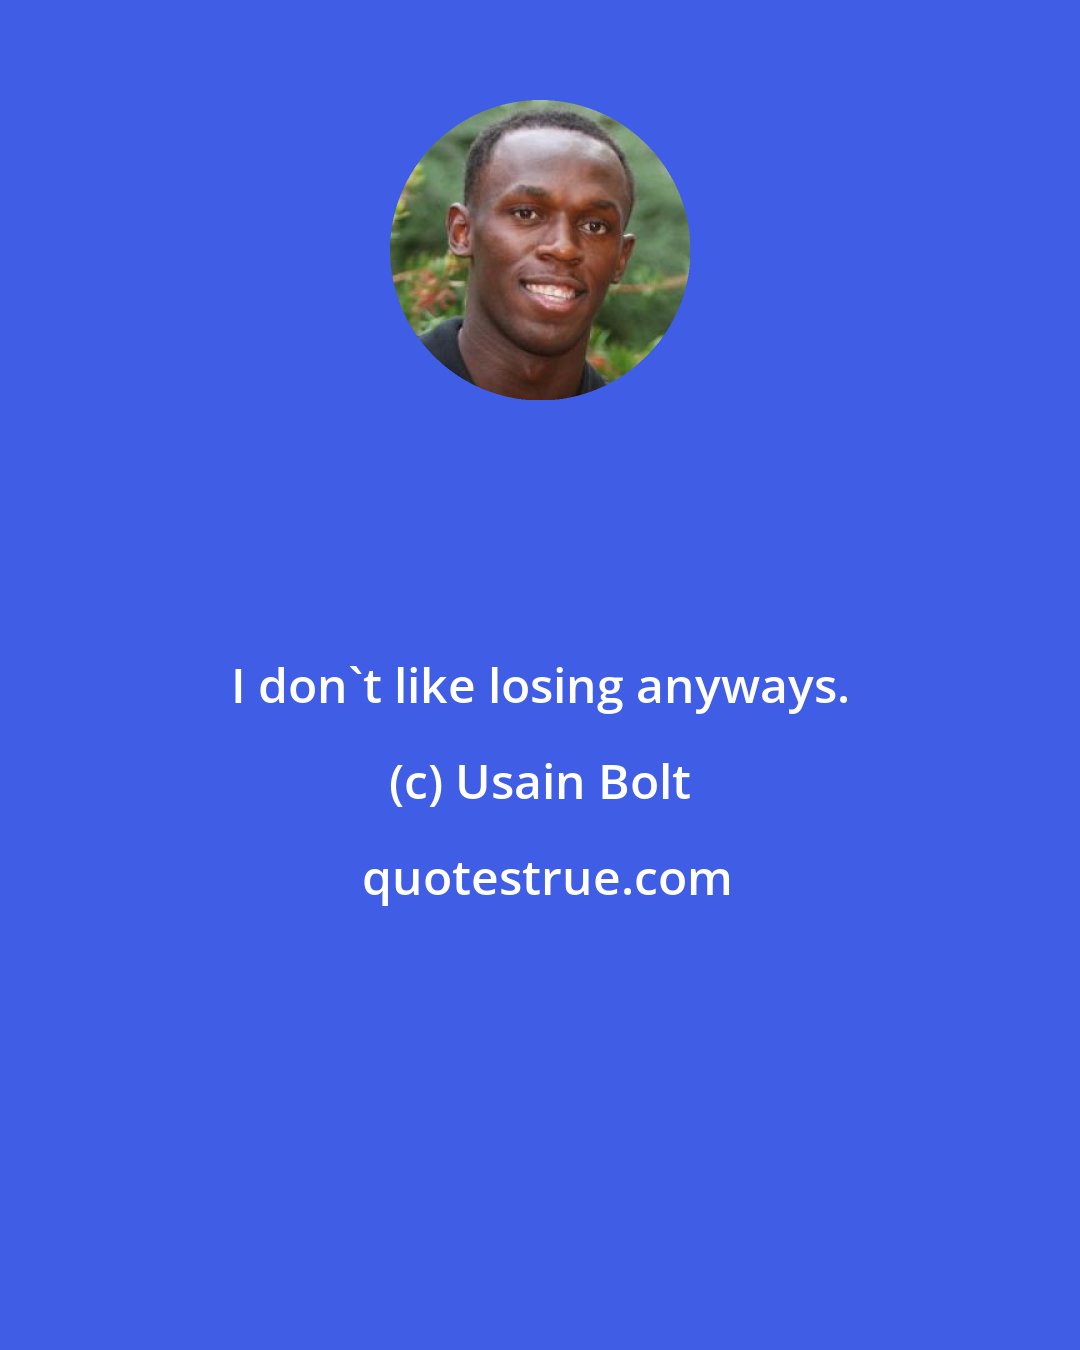 Usain Bolt: I don't like losing anyways.